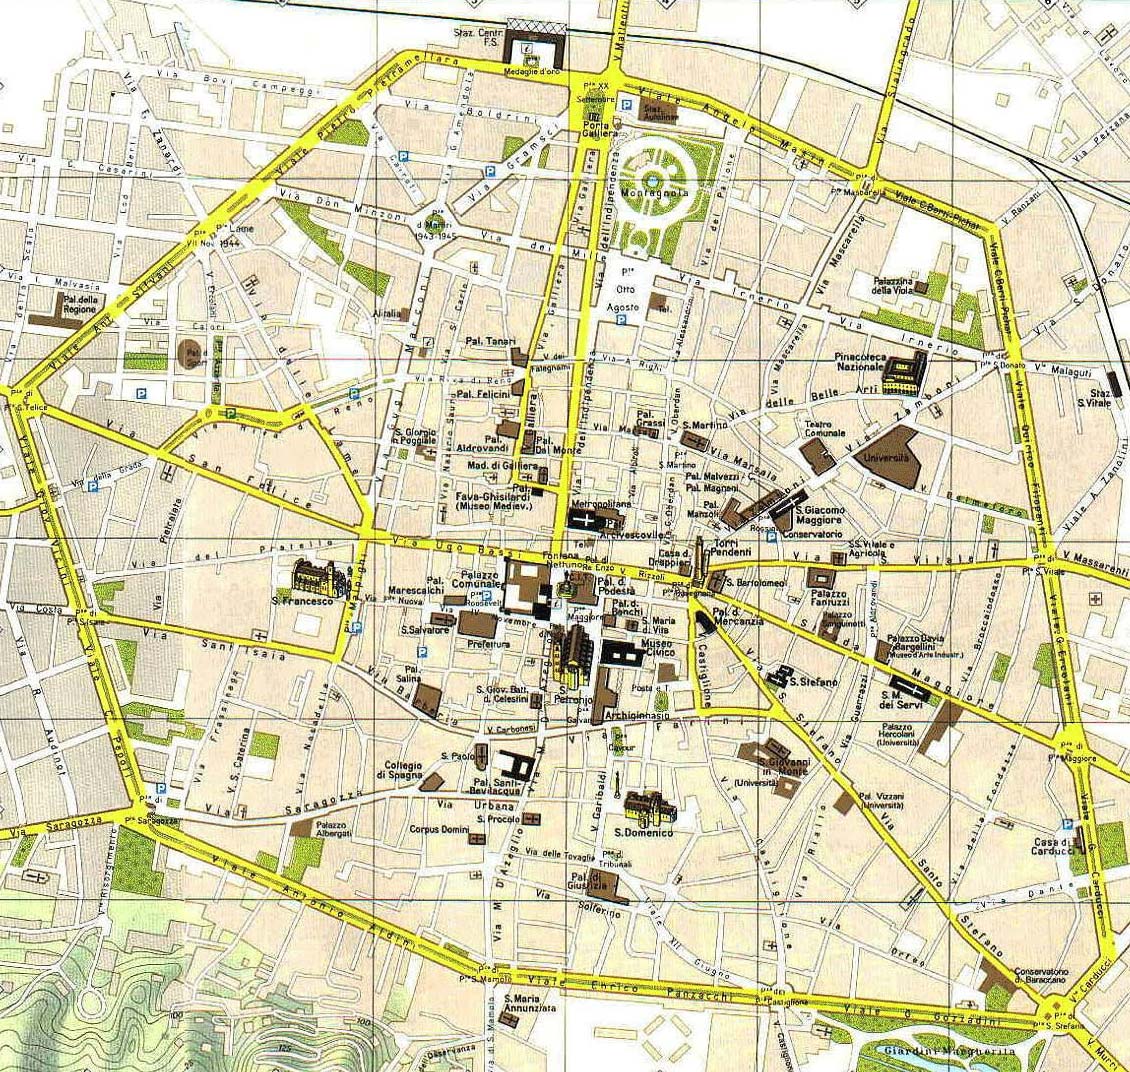 Bologna historical map